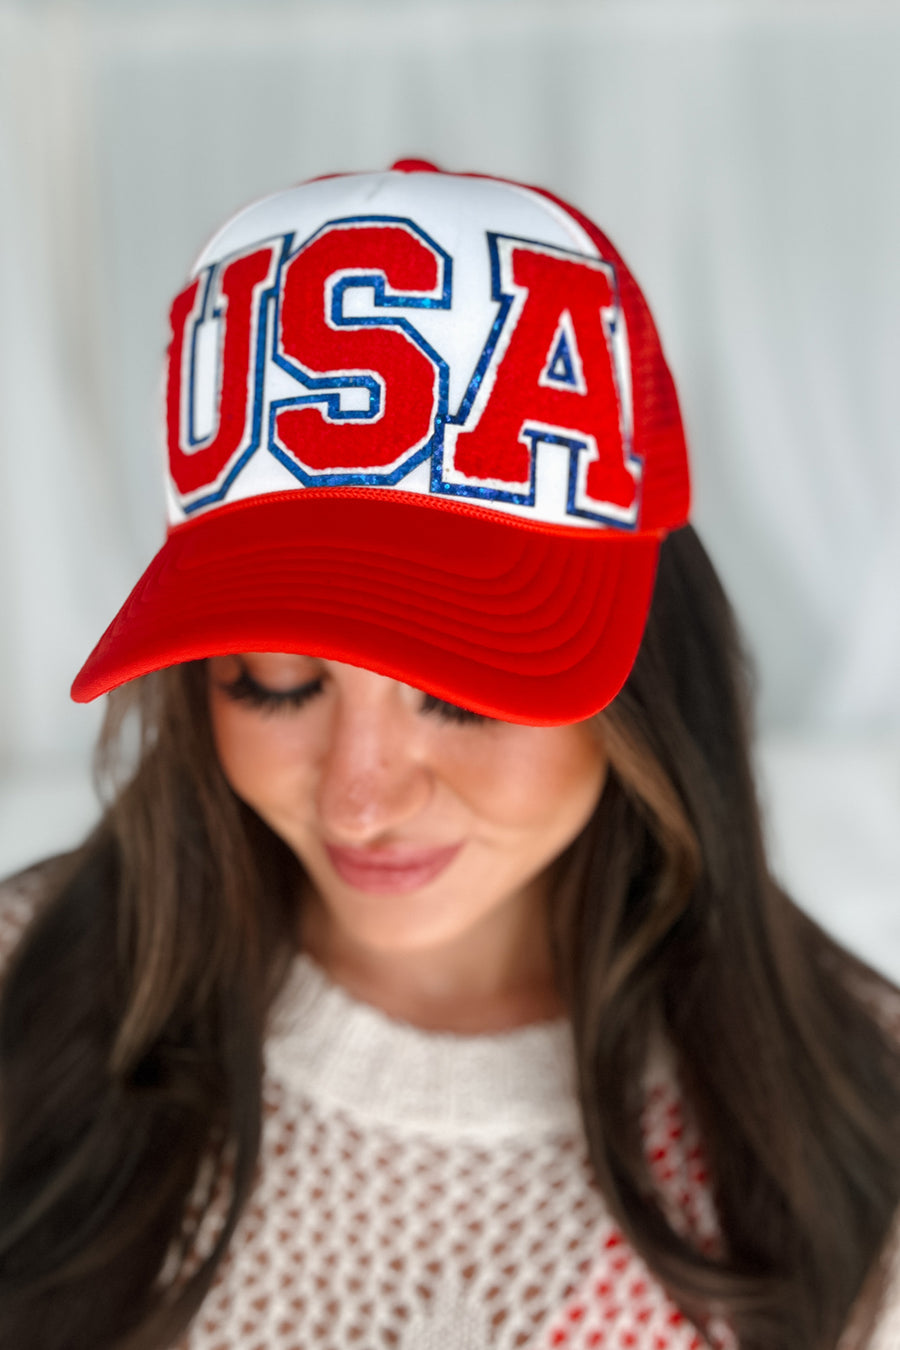 American Sweetheart "USA" Trucker Hat (Red/White)